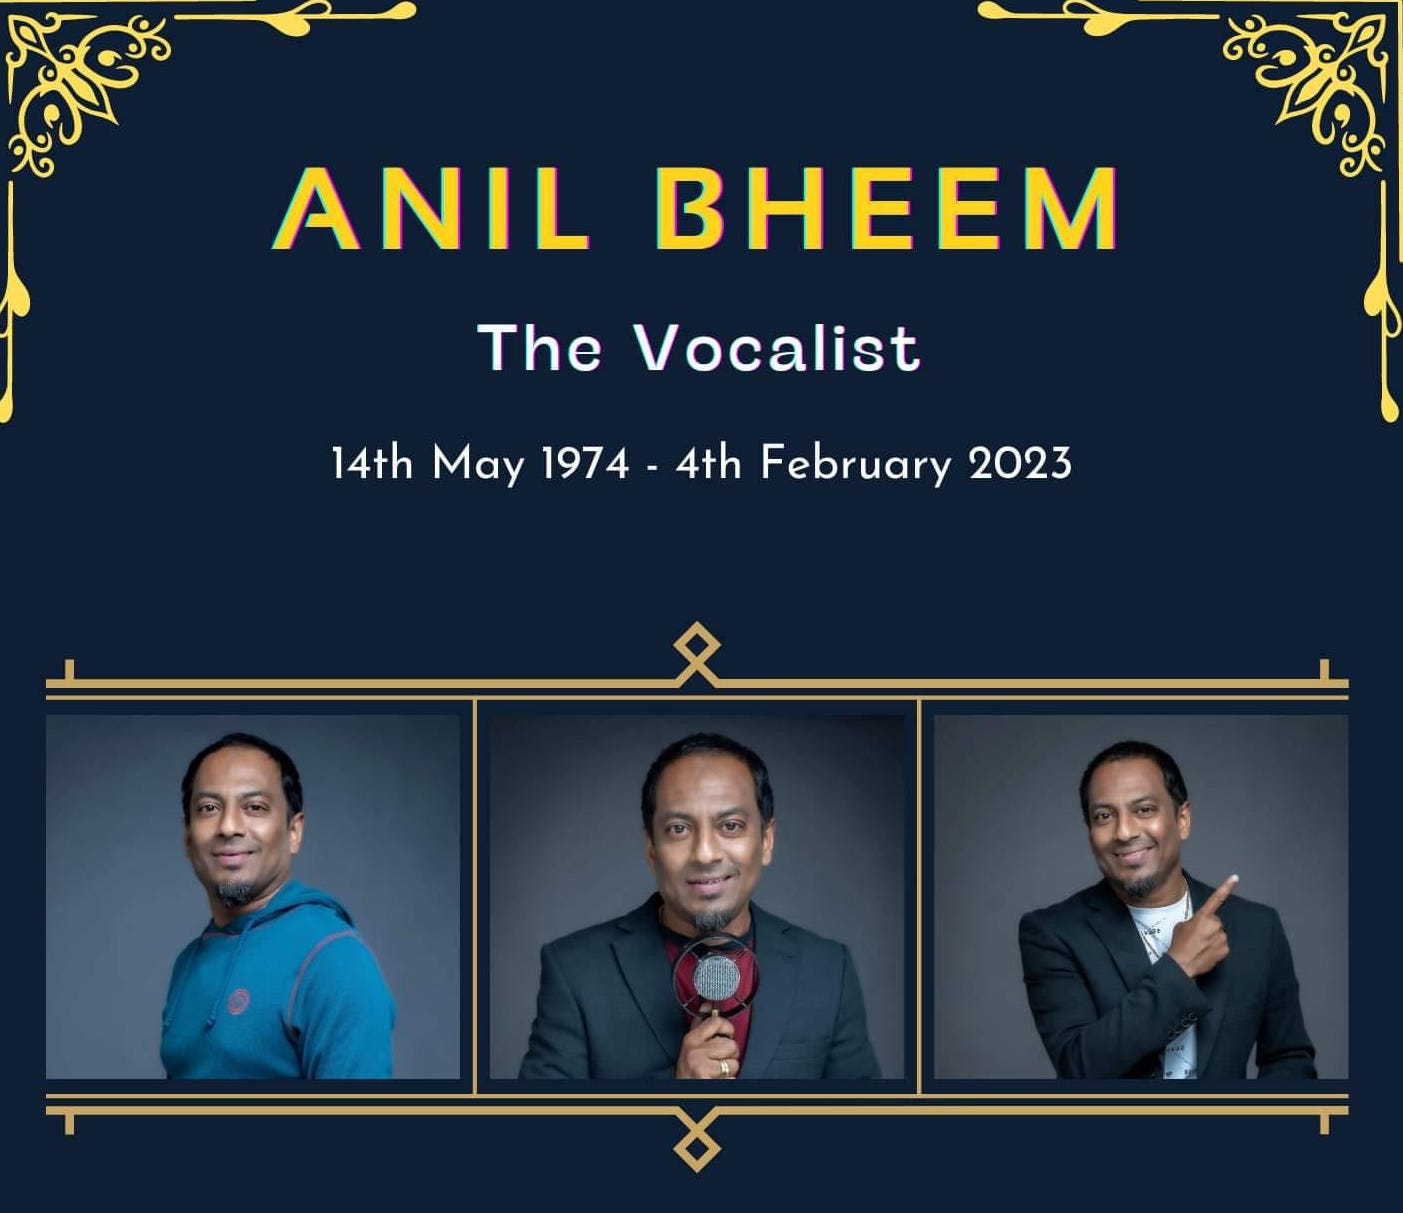 Anil Bheem has passed away